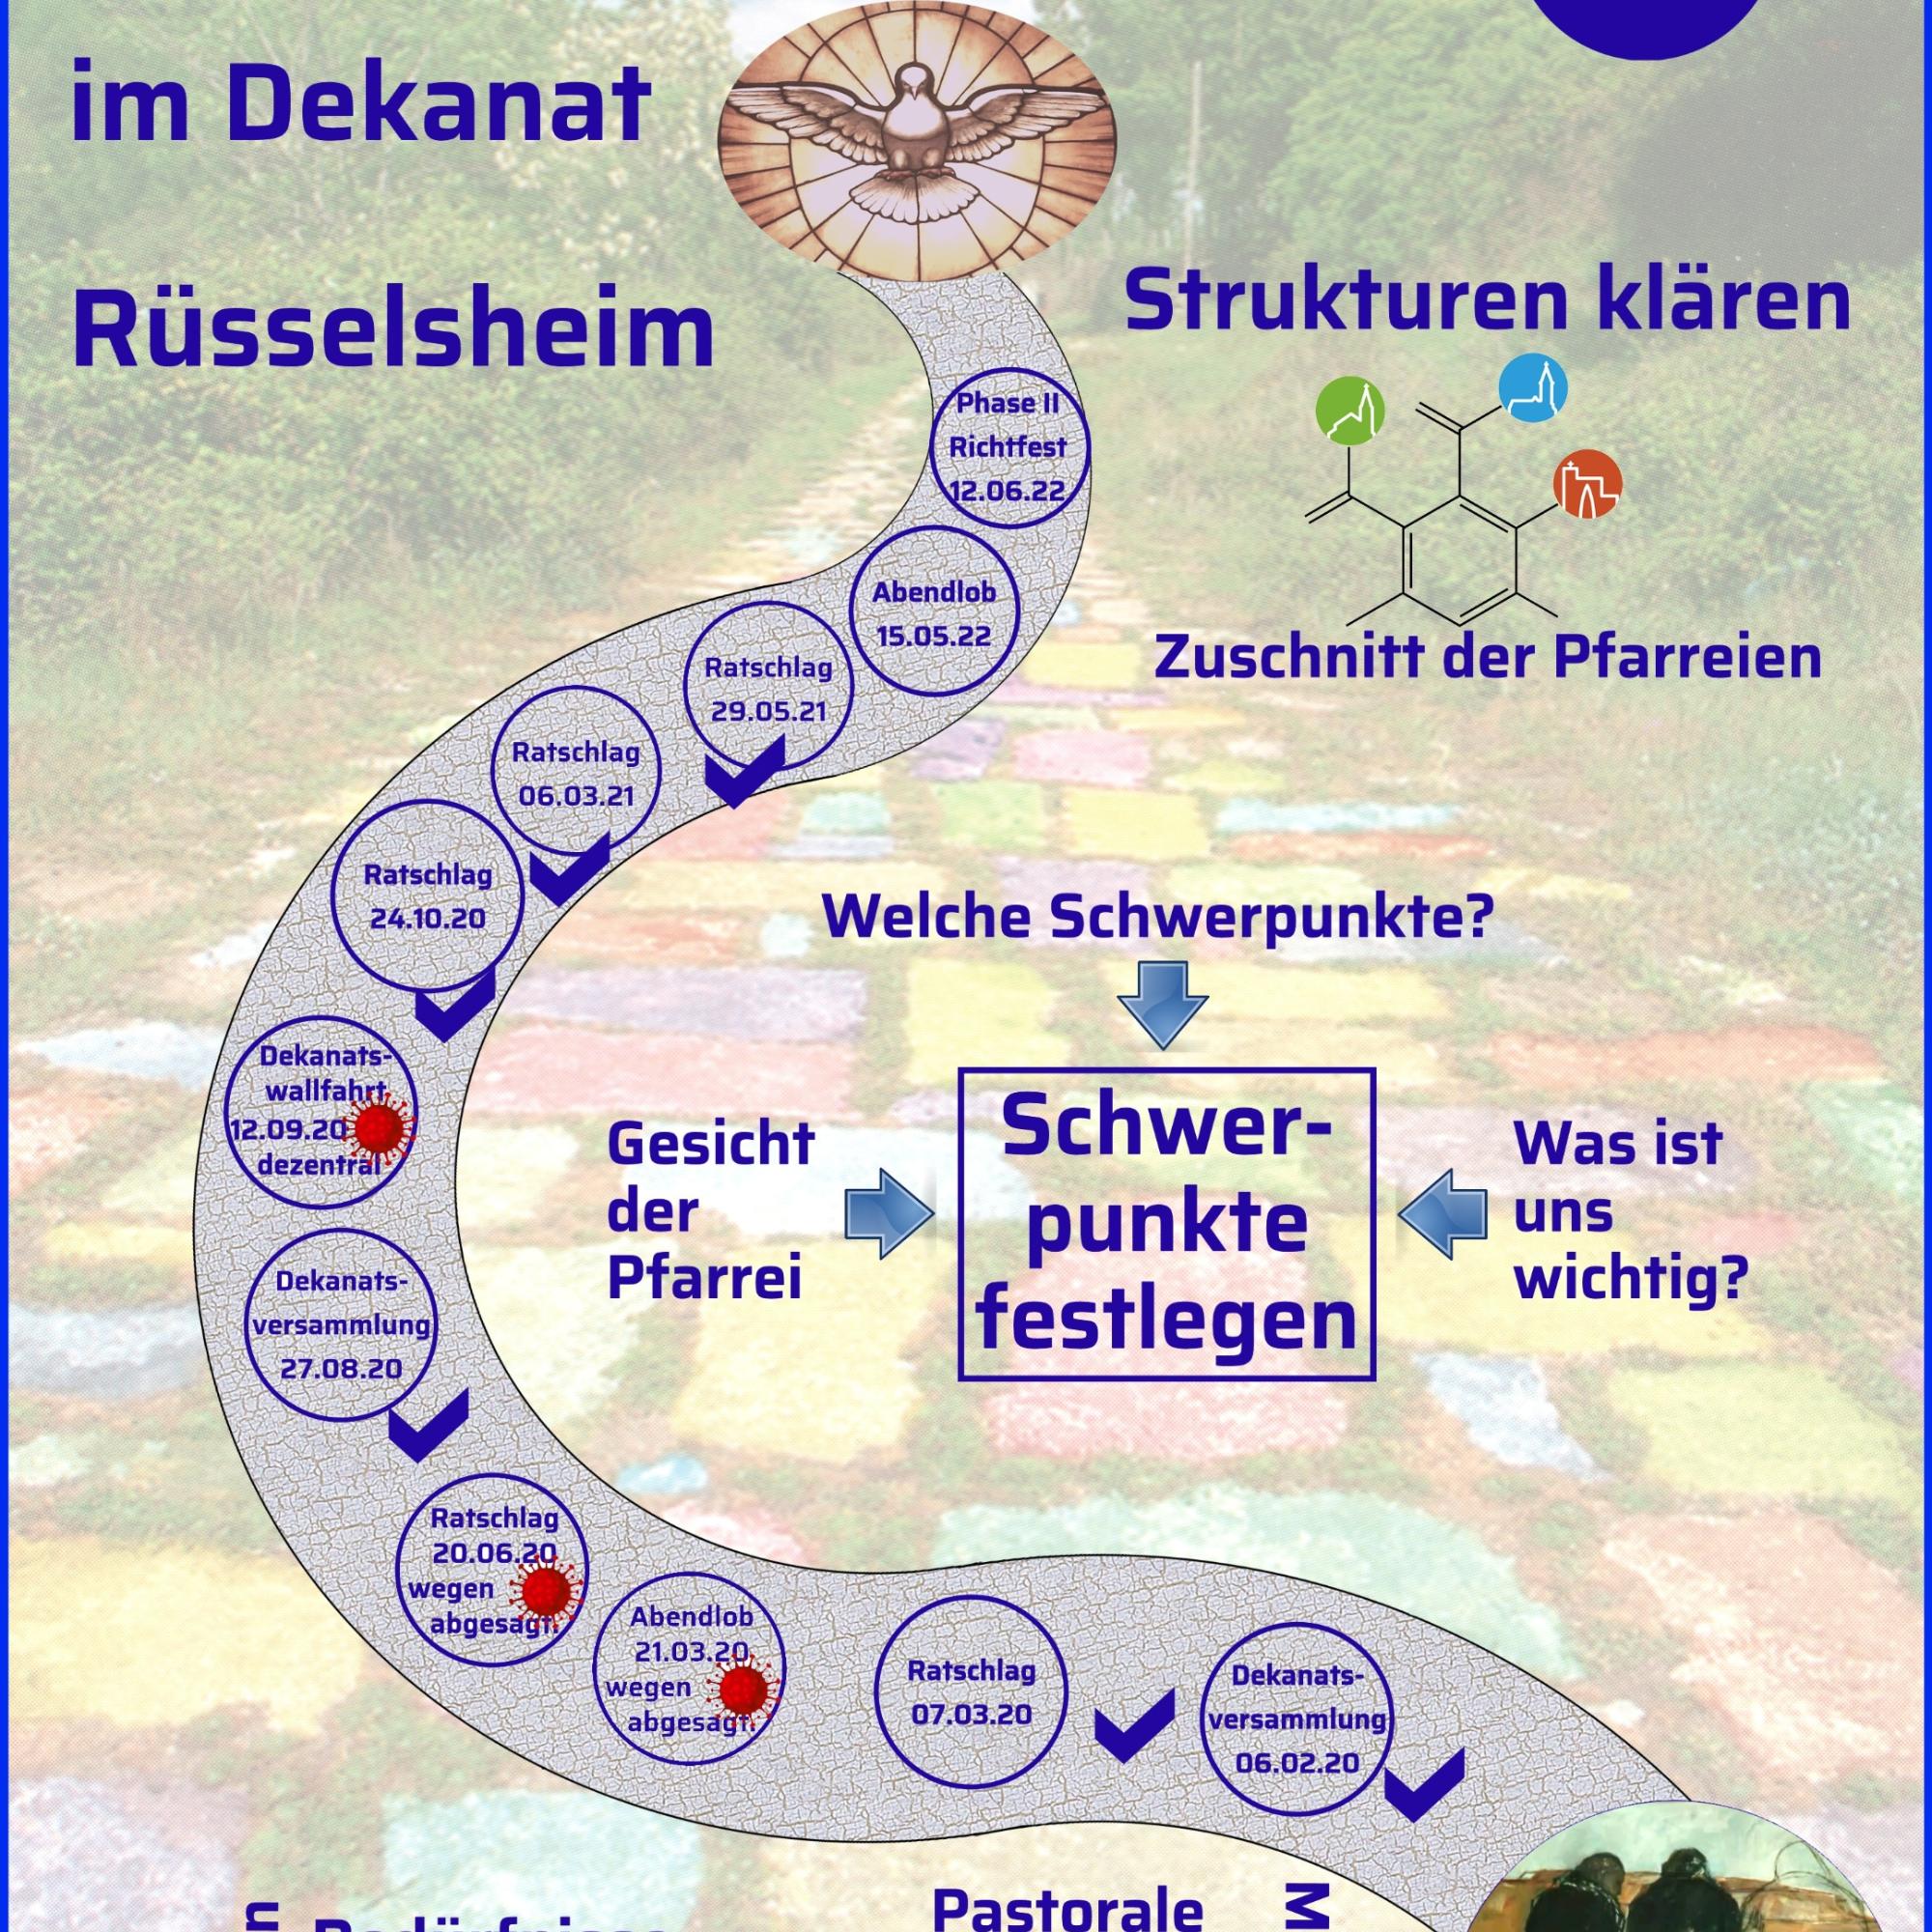 Pastoraler Weg  im Dekanat Rüsselsheim